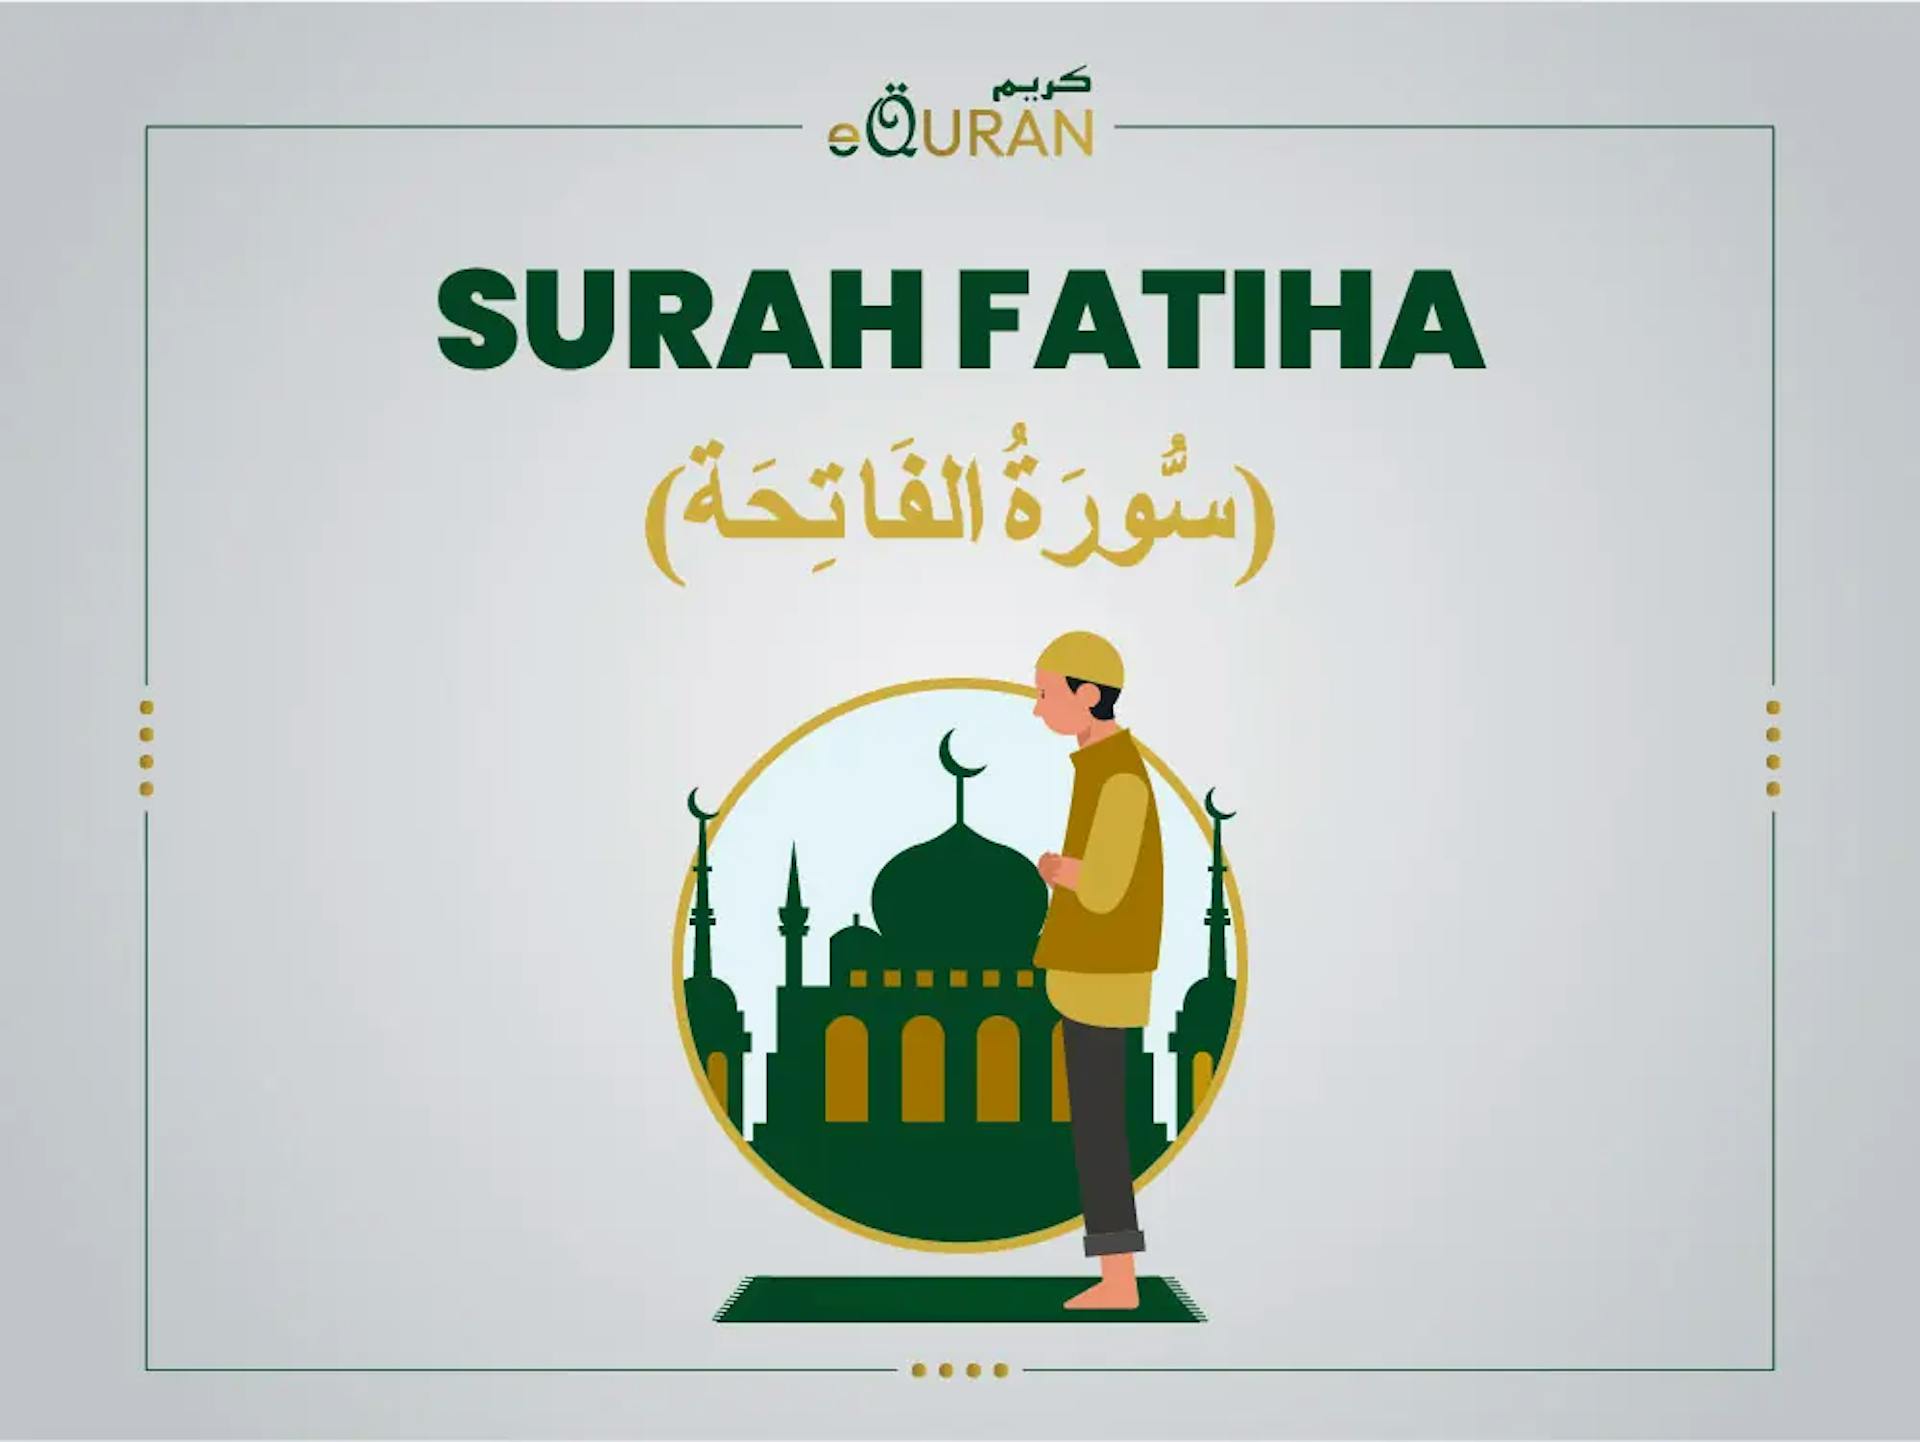 Surah Fatiha and its translation 